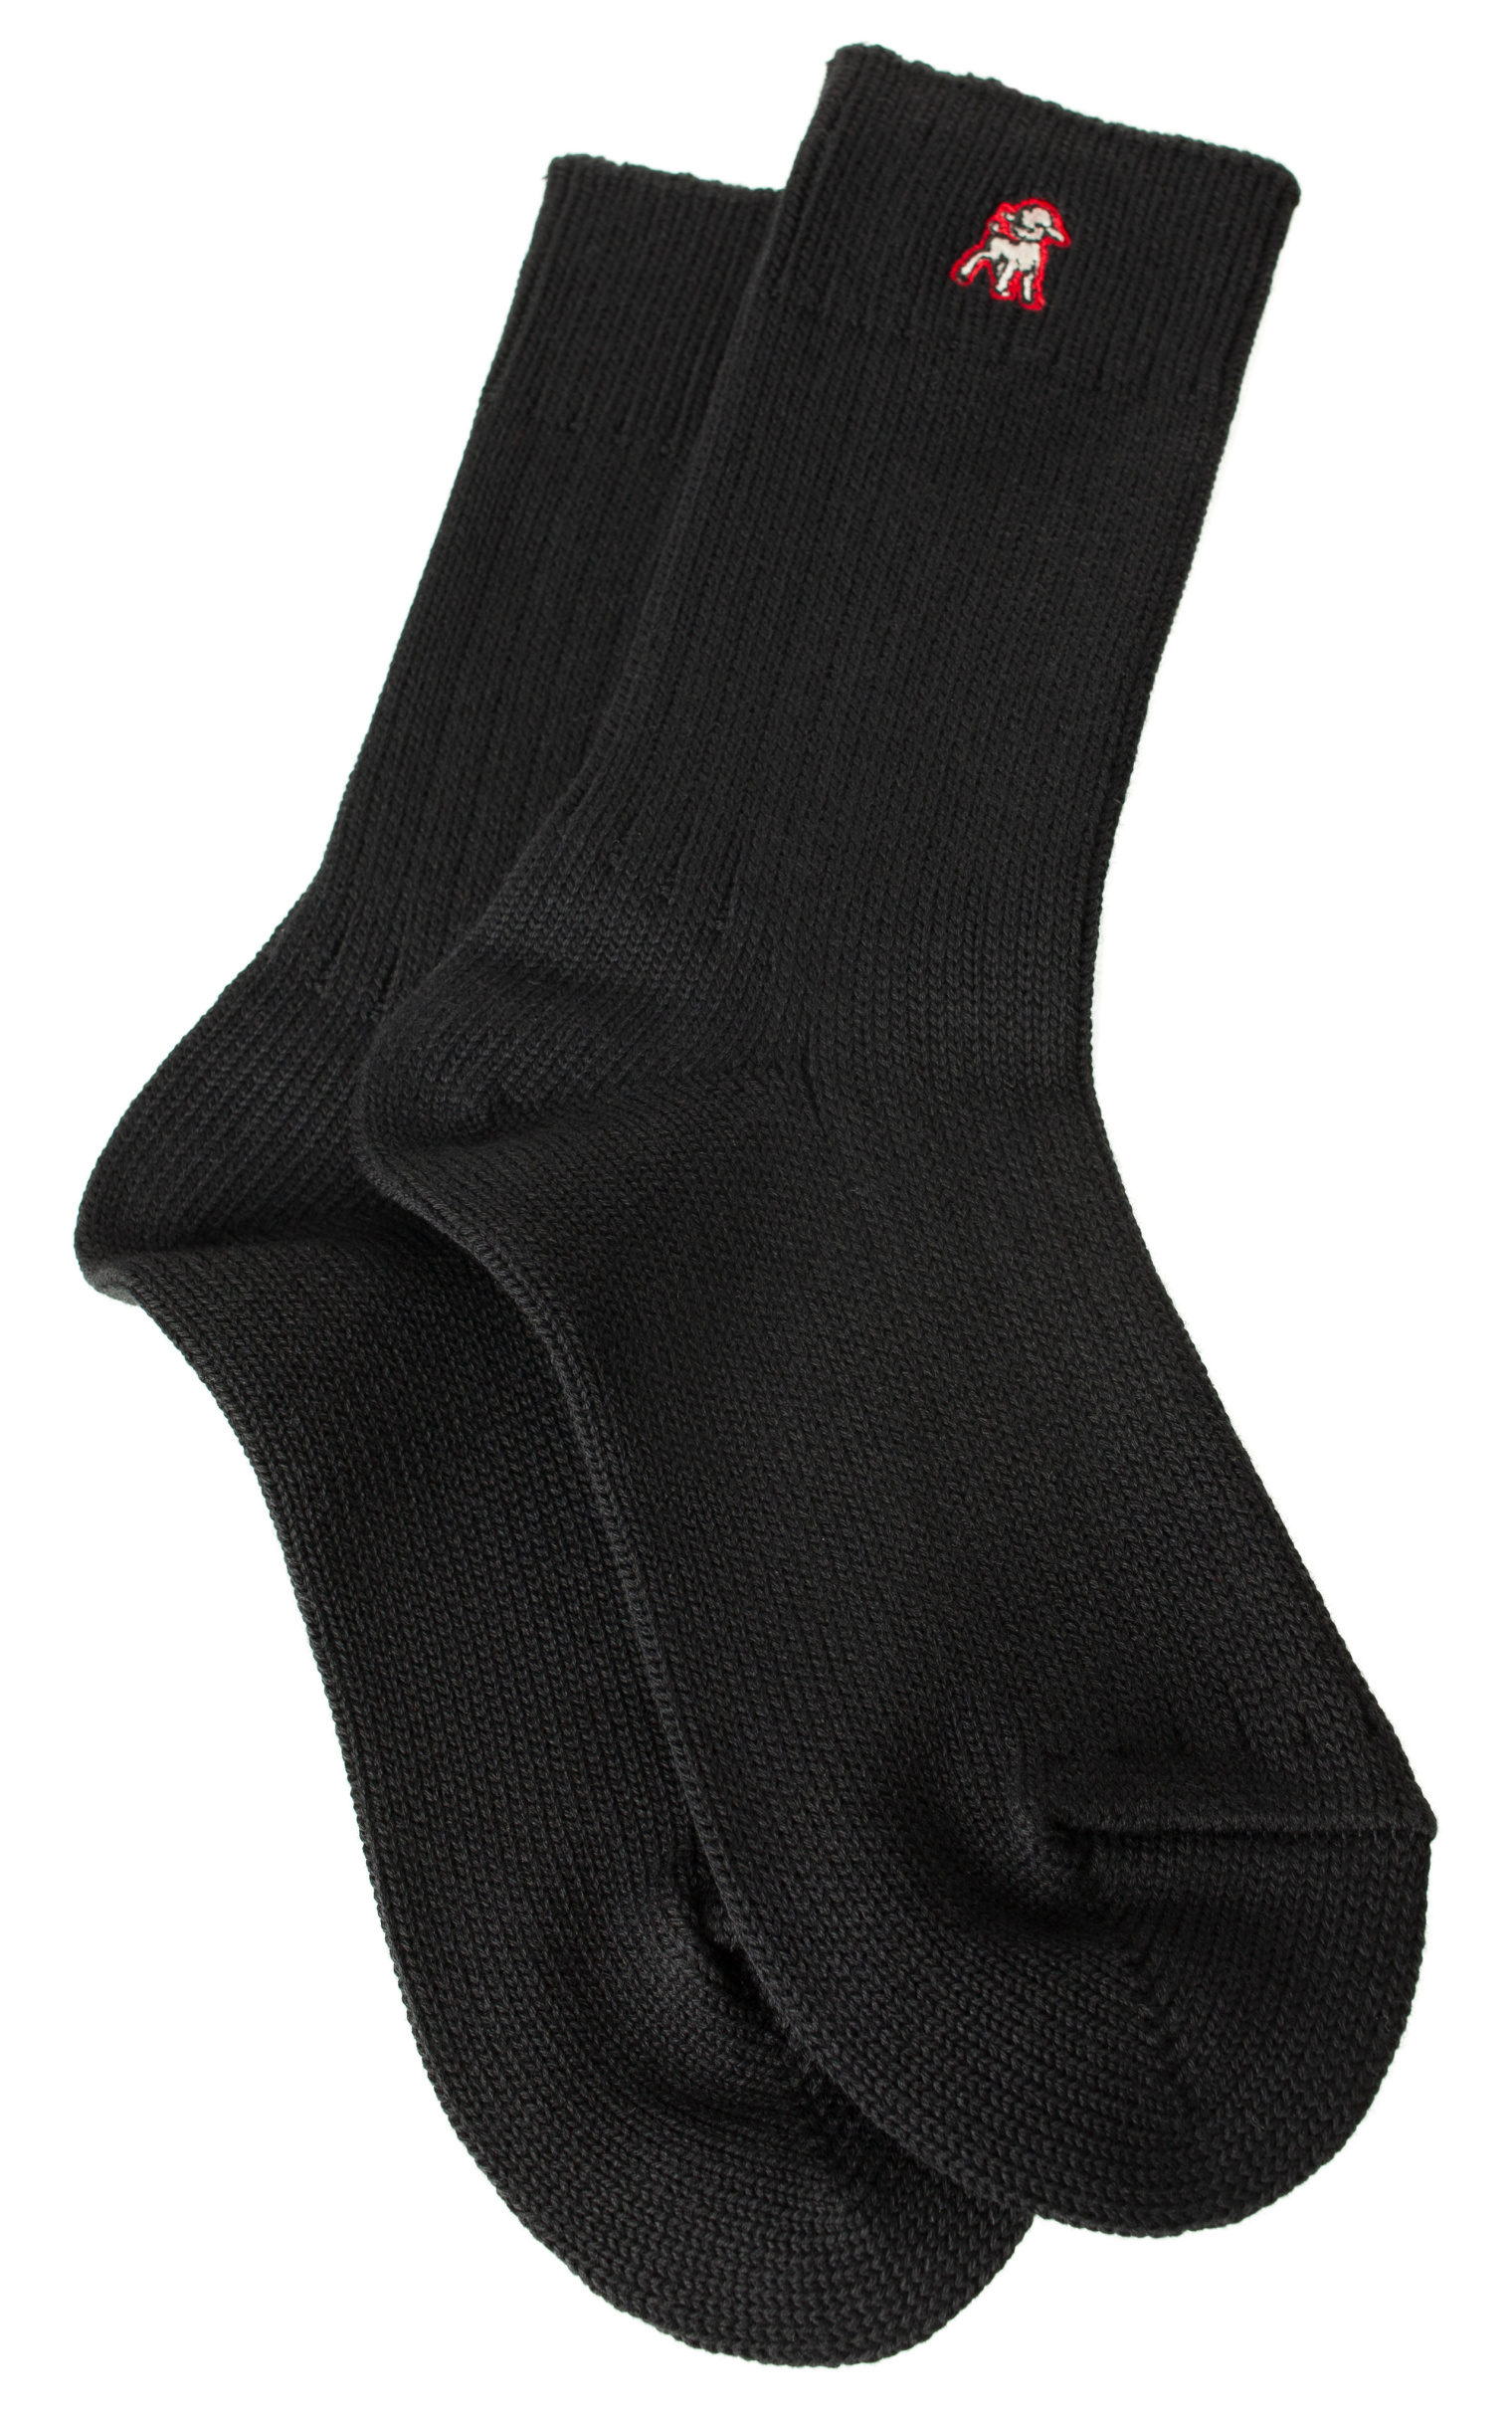 Undercover Black embroidered socks